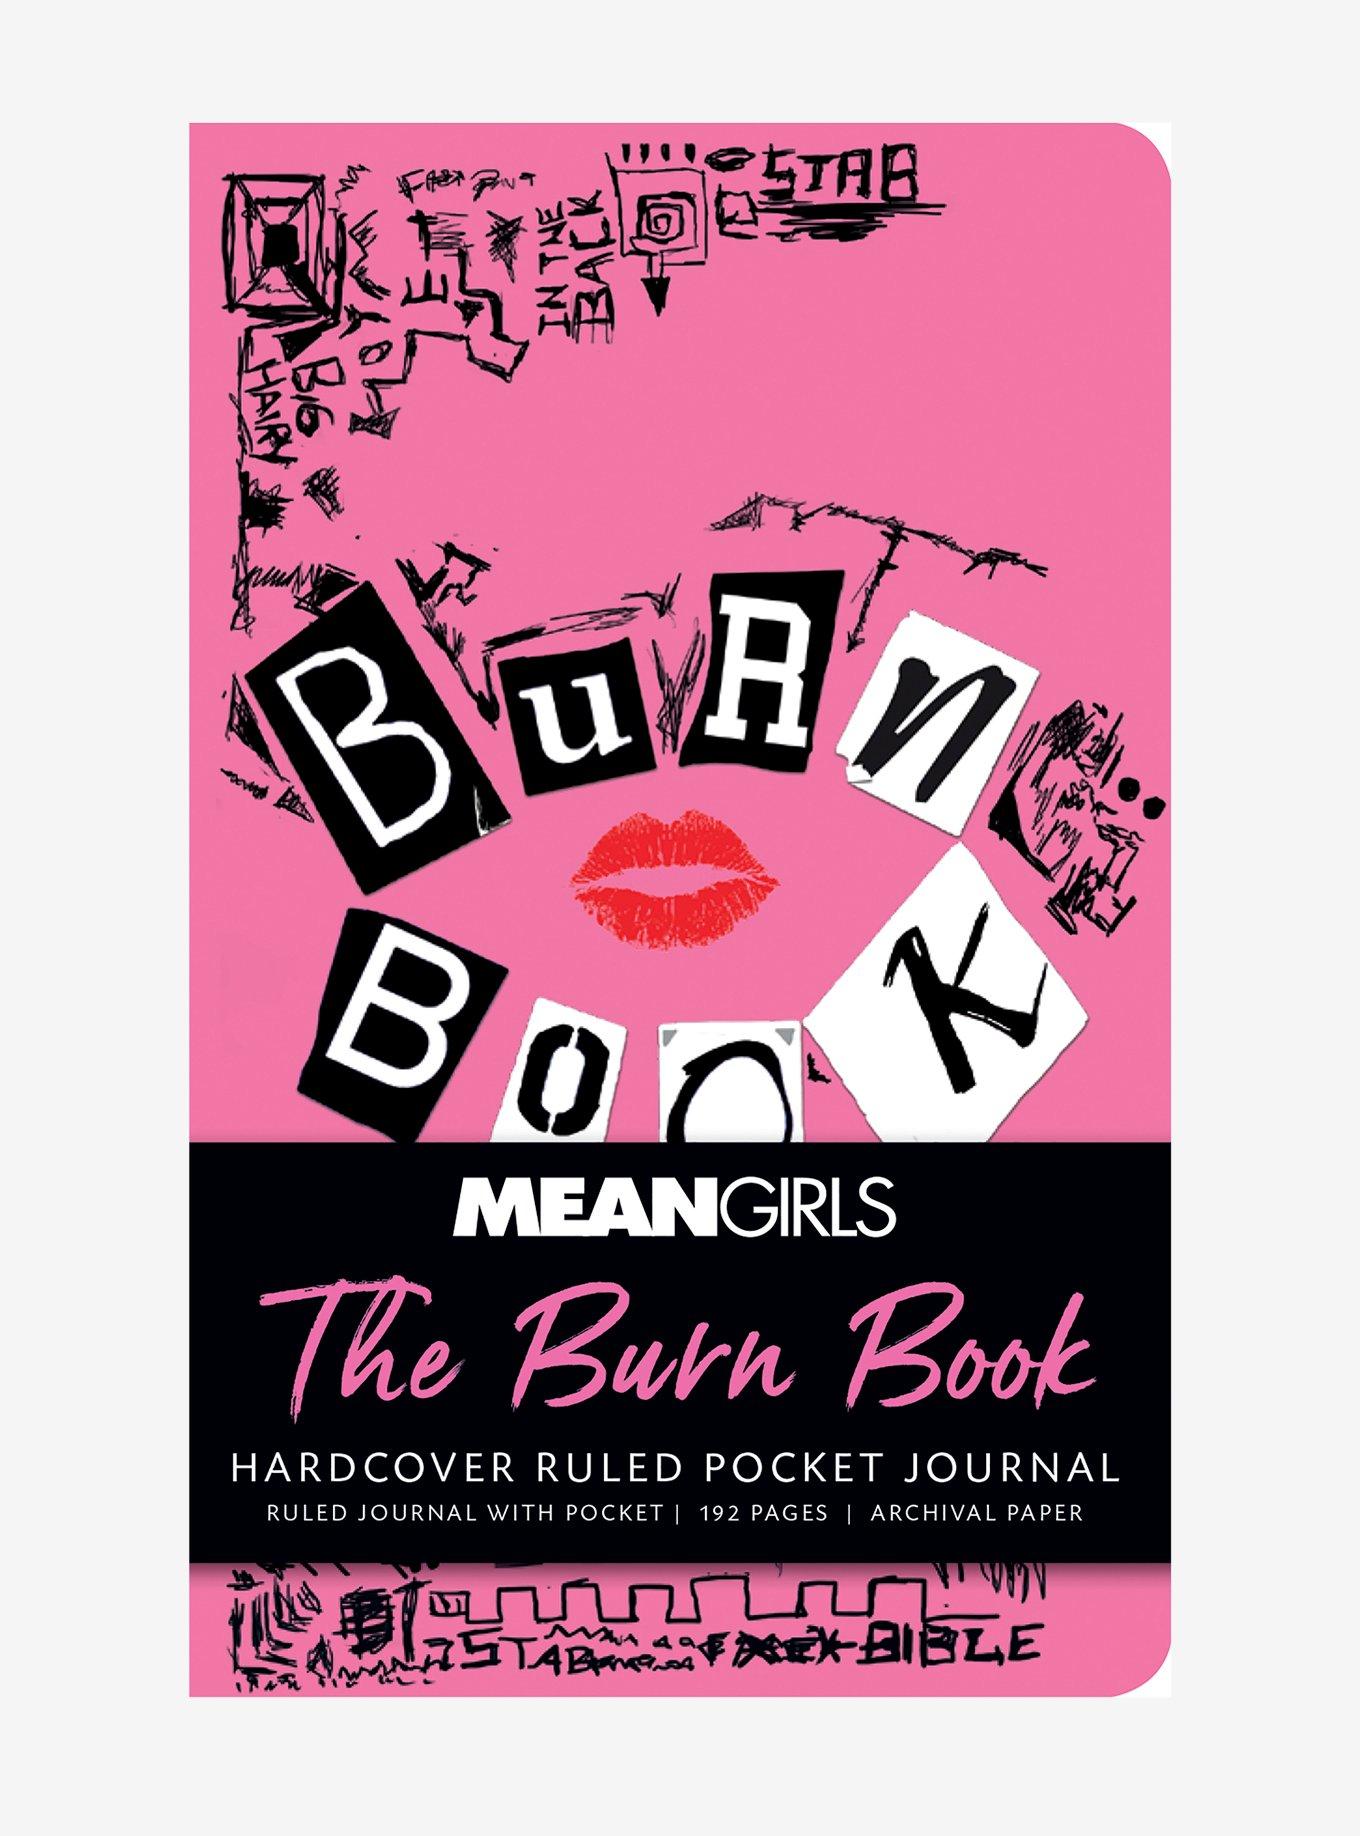 Burn Book Sticker | Mean Girls Burn Book Vinyl Sticker | Mean Girls Movie  Stickers